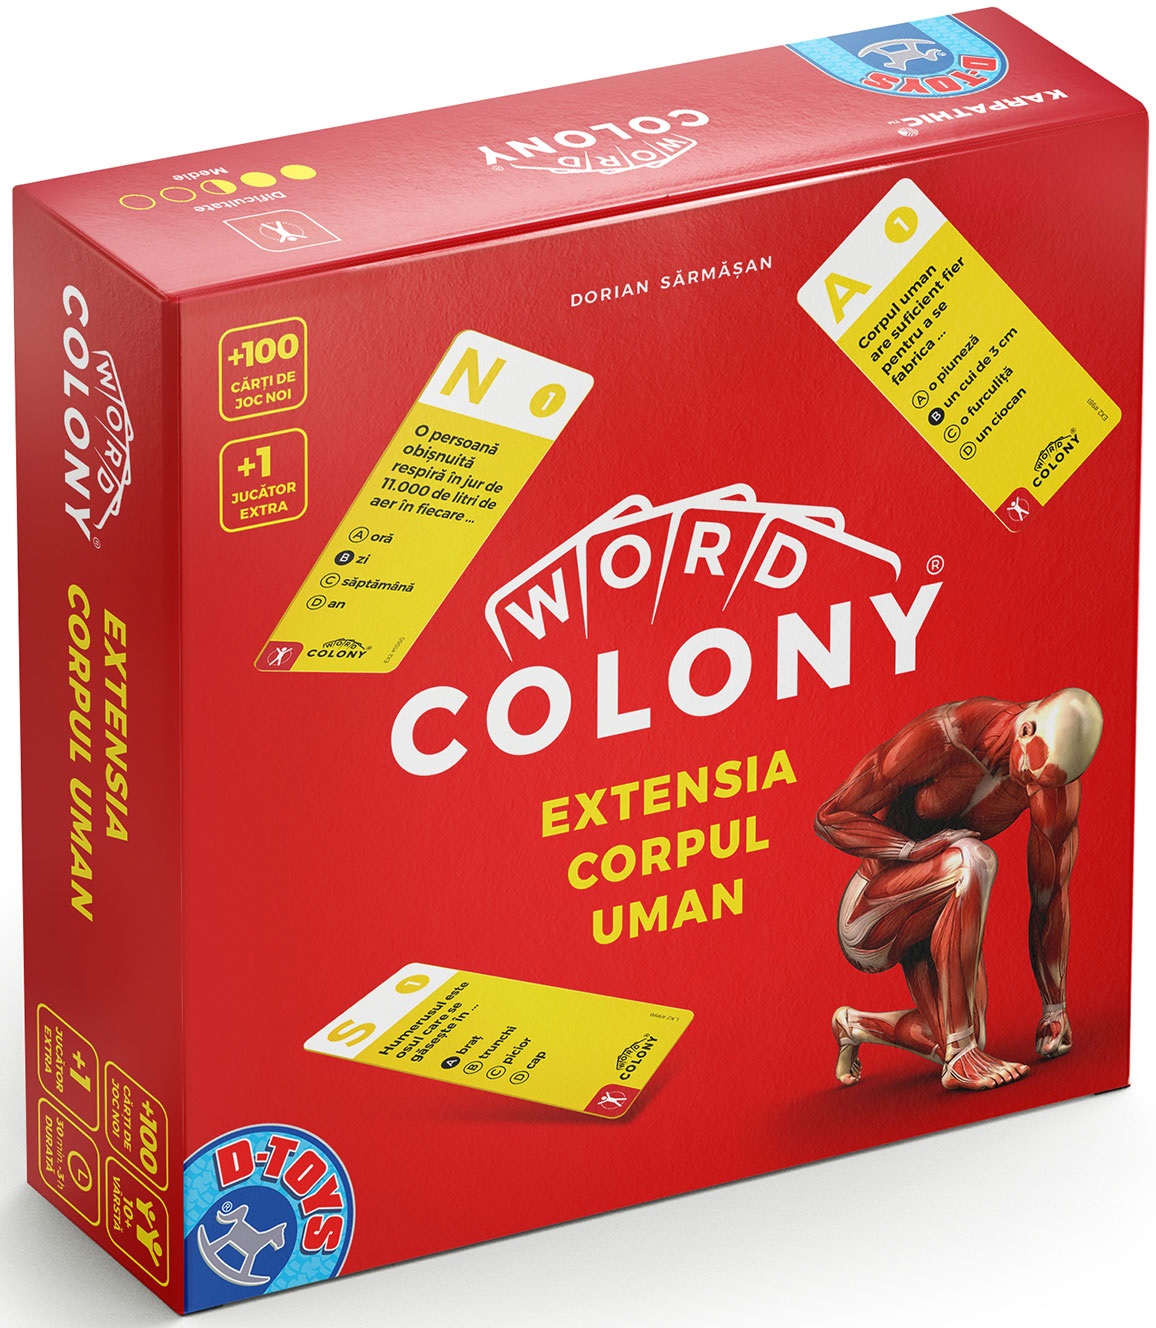  Extensie - Word Colony - Corpul uman | D-Toys 